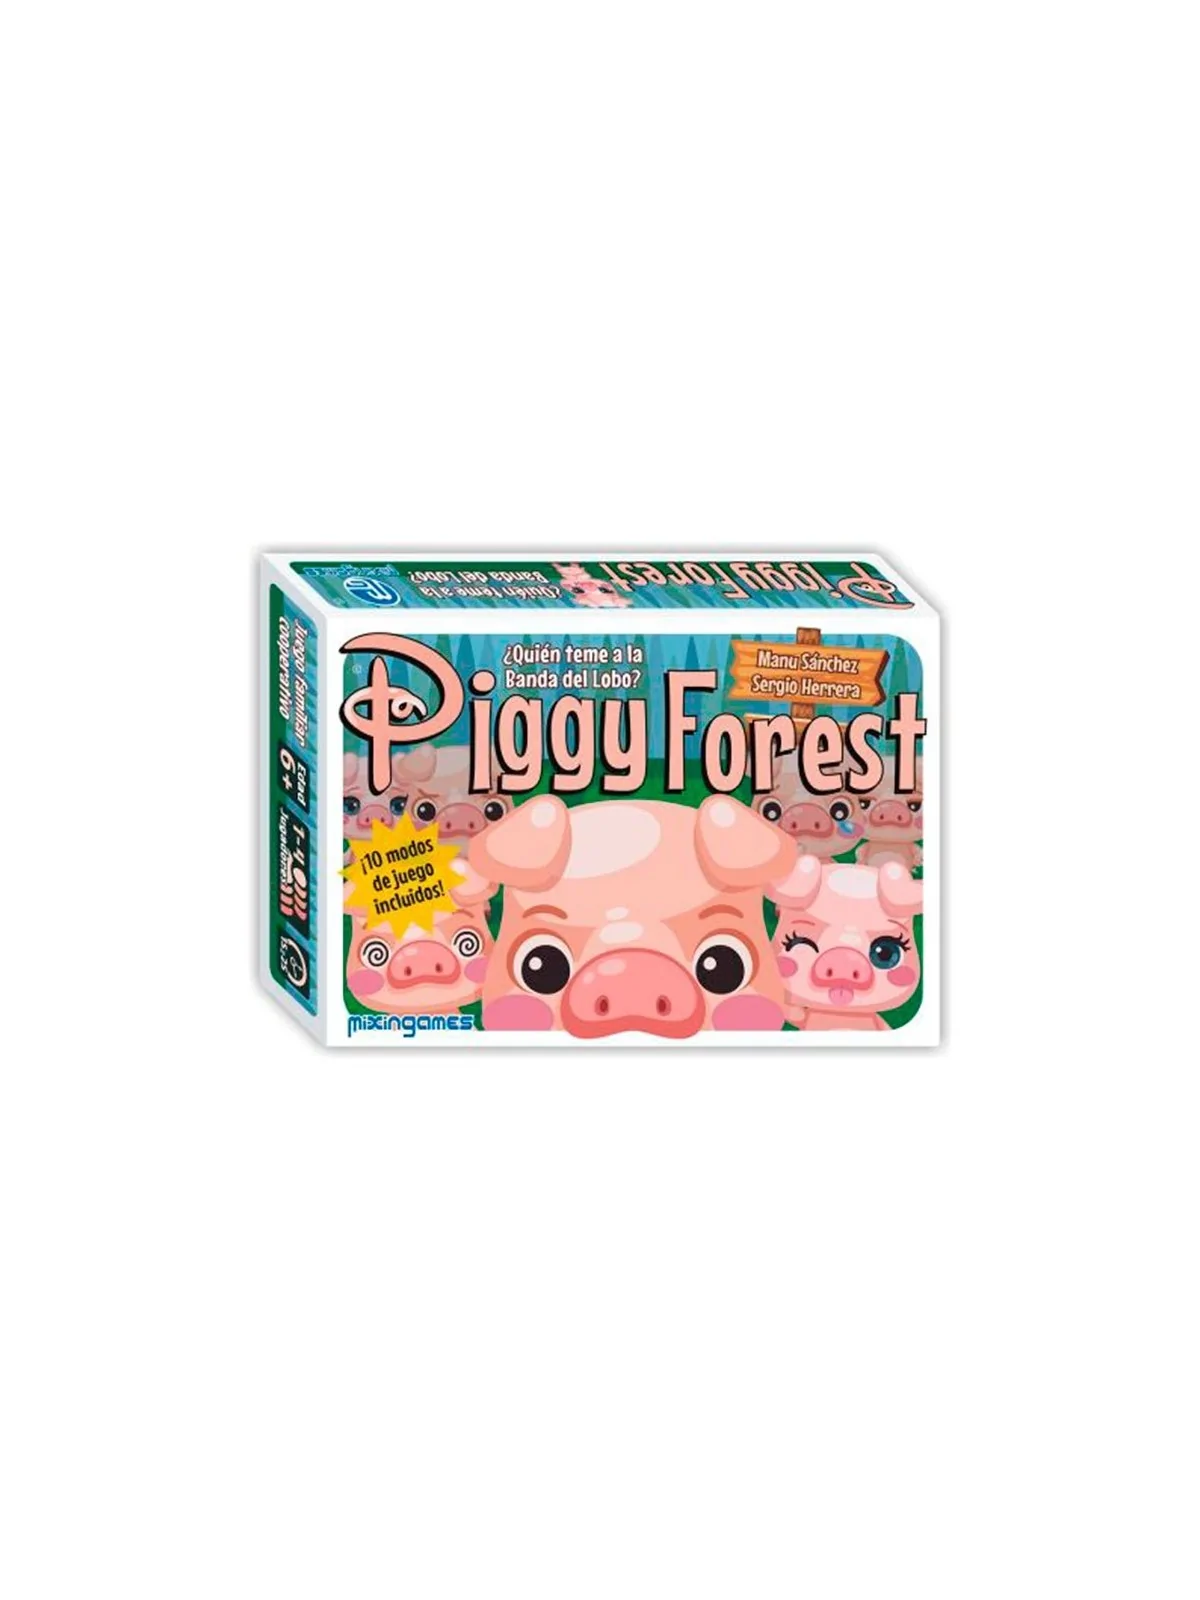 Comprar Piggy Forest barato al mejor precio 13,46 € de Tranjis Games